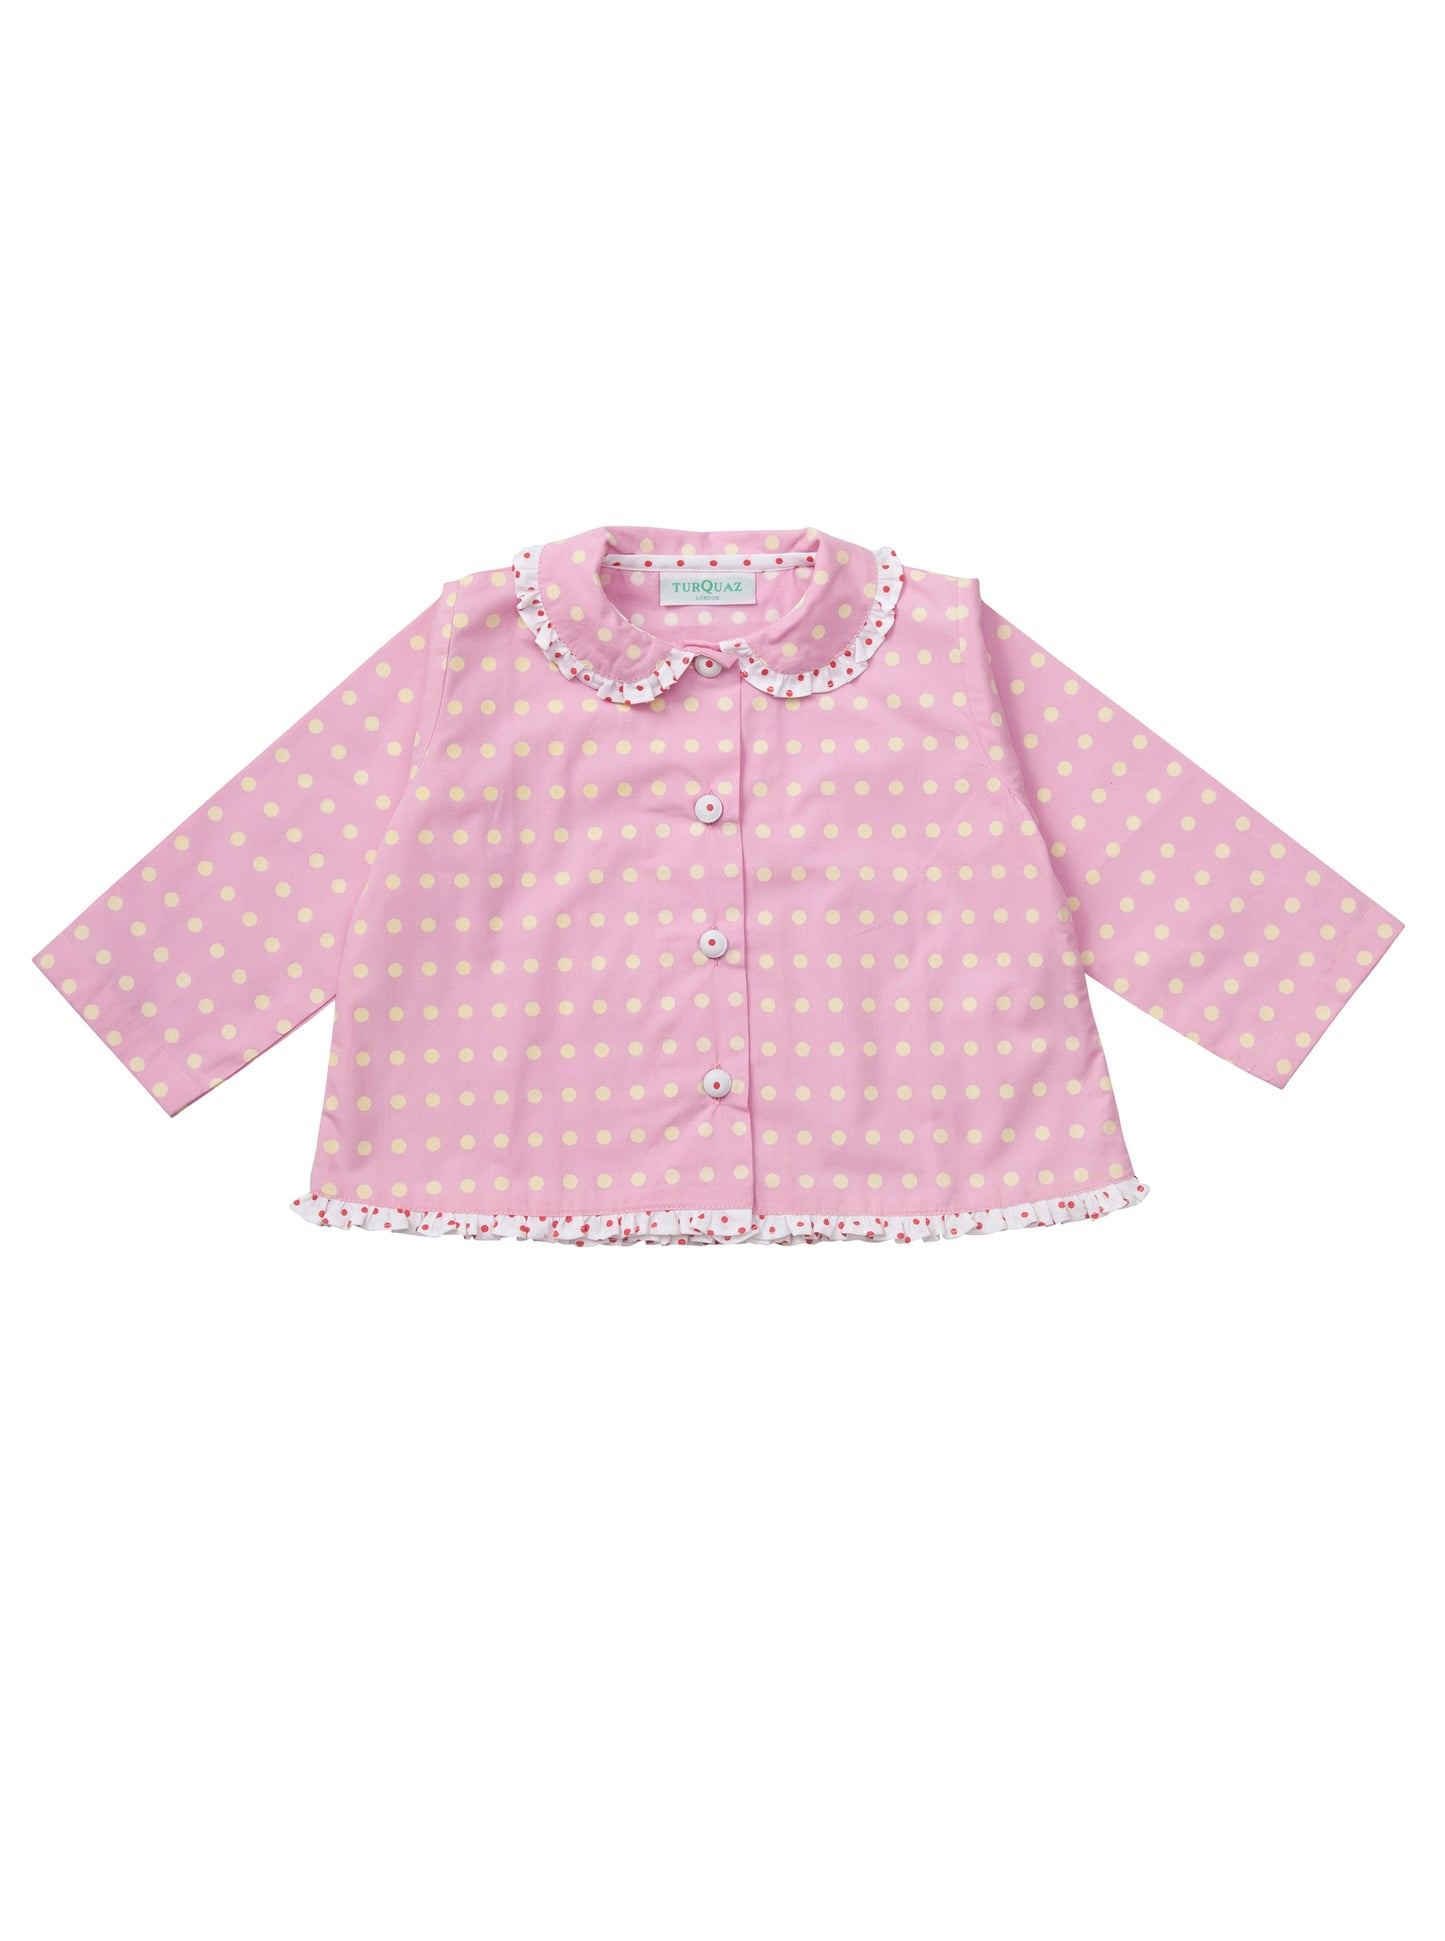 Pink polka-dot children's pyjamas from Turquaz, frilled collar and edging.